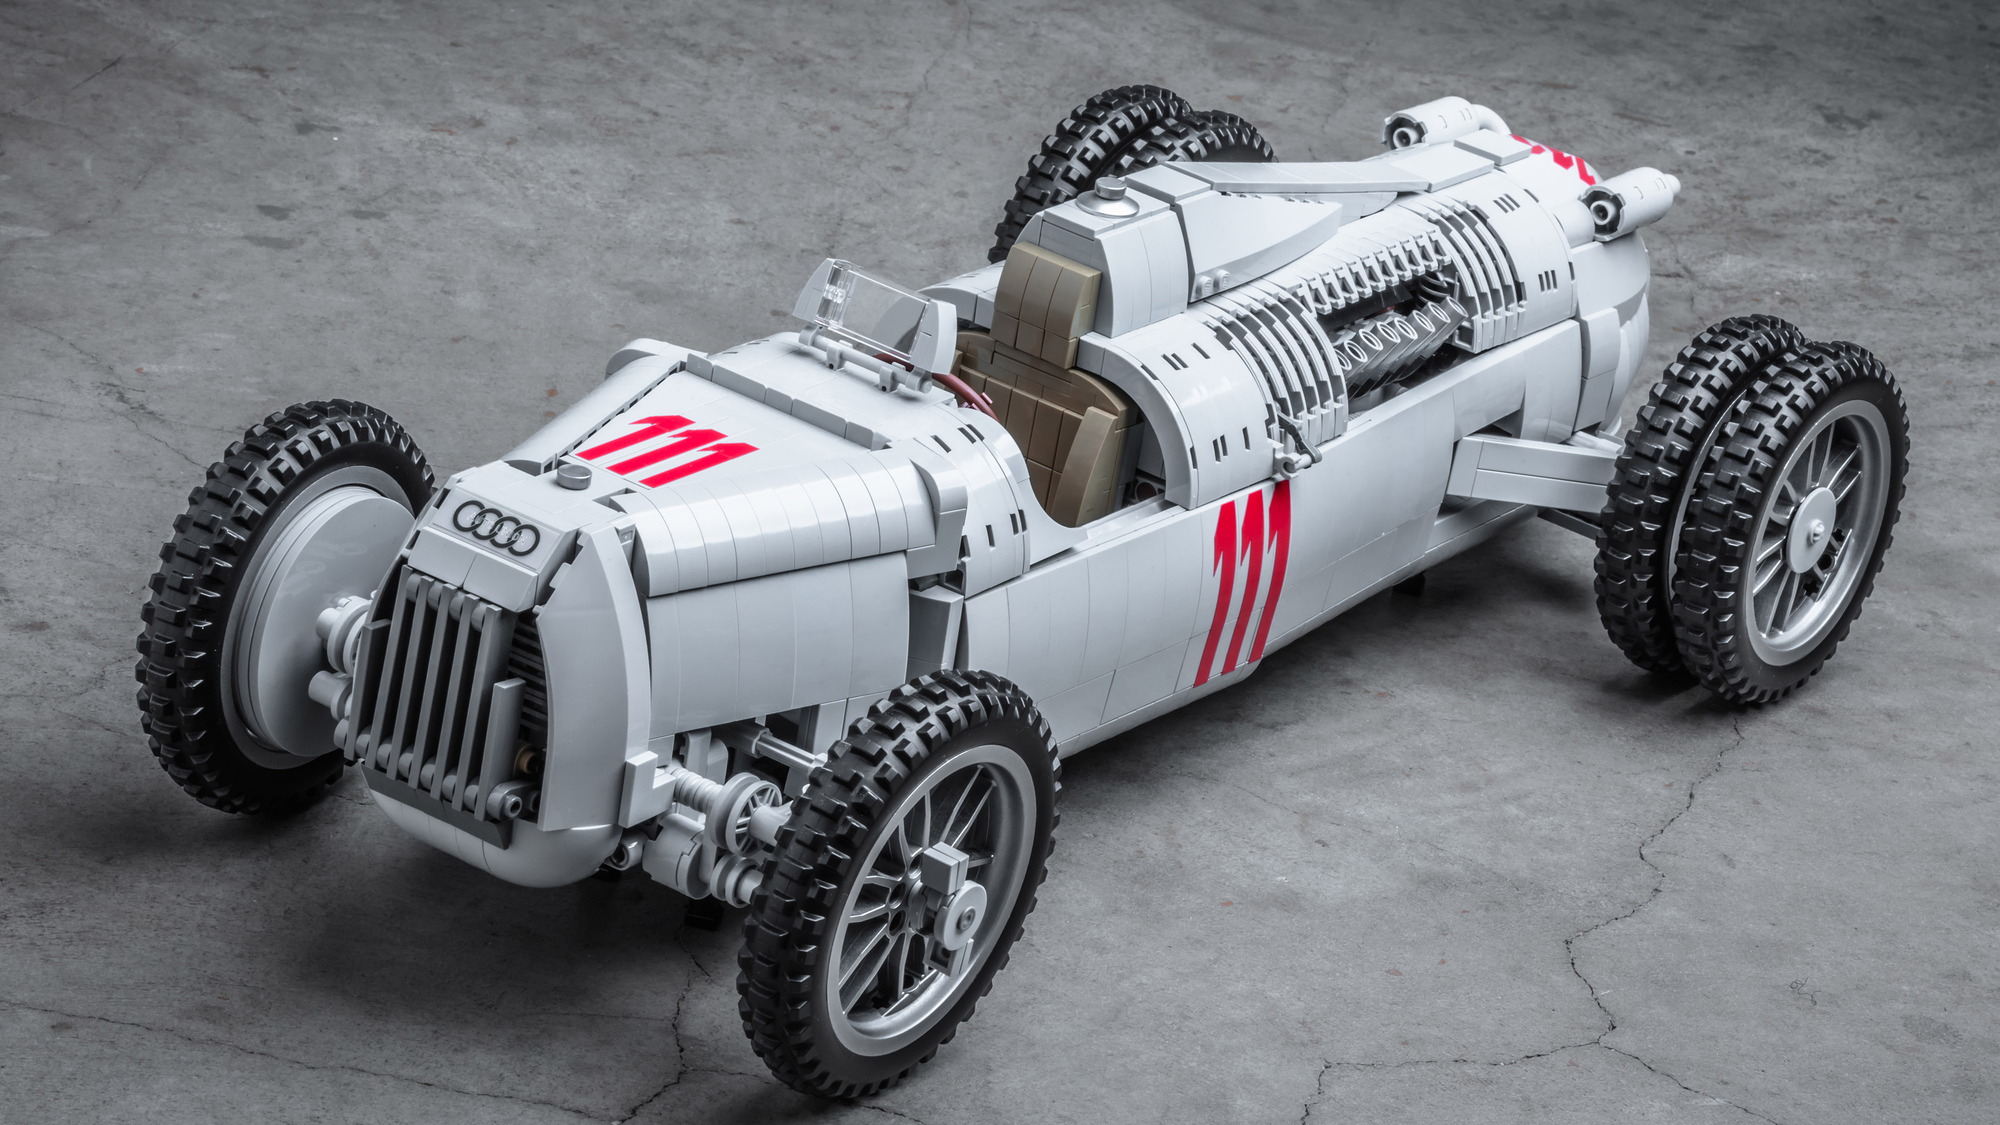 1936 Auto Union Lego race car